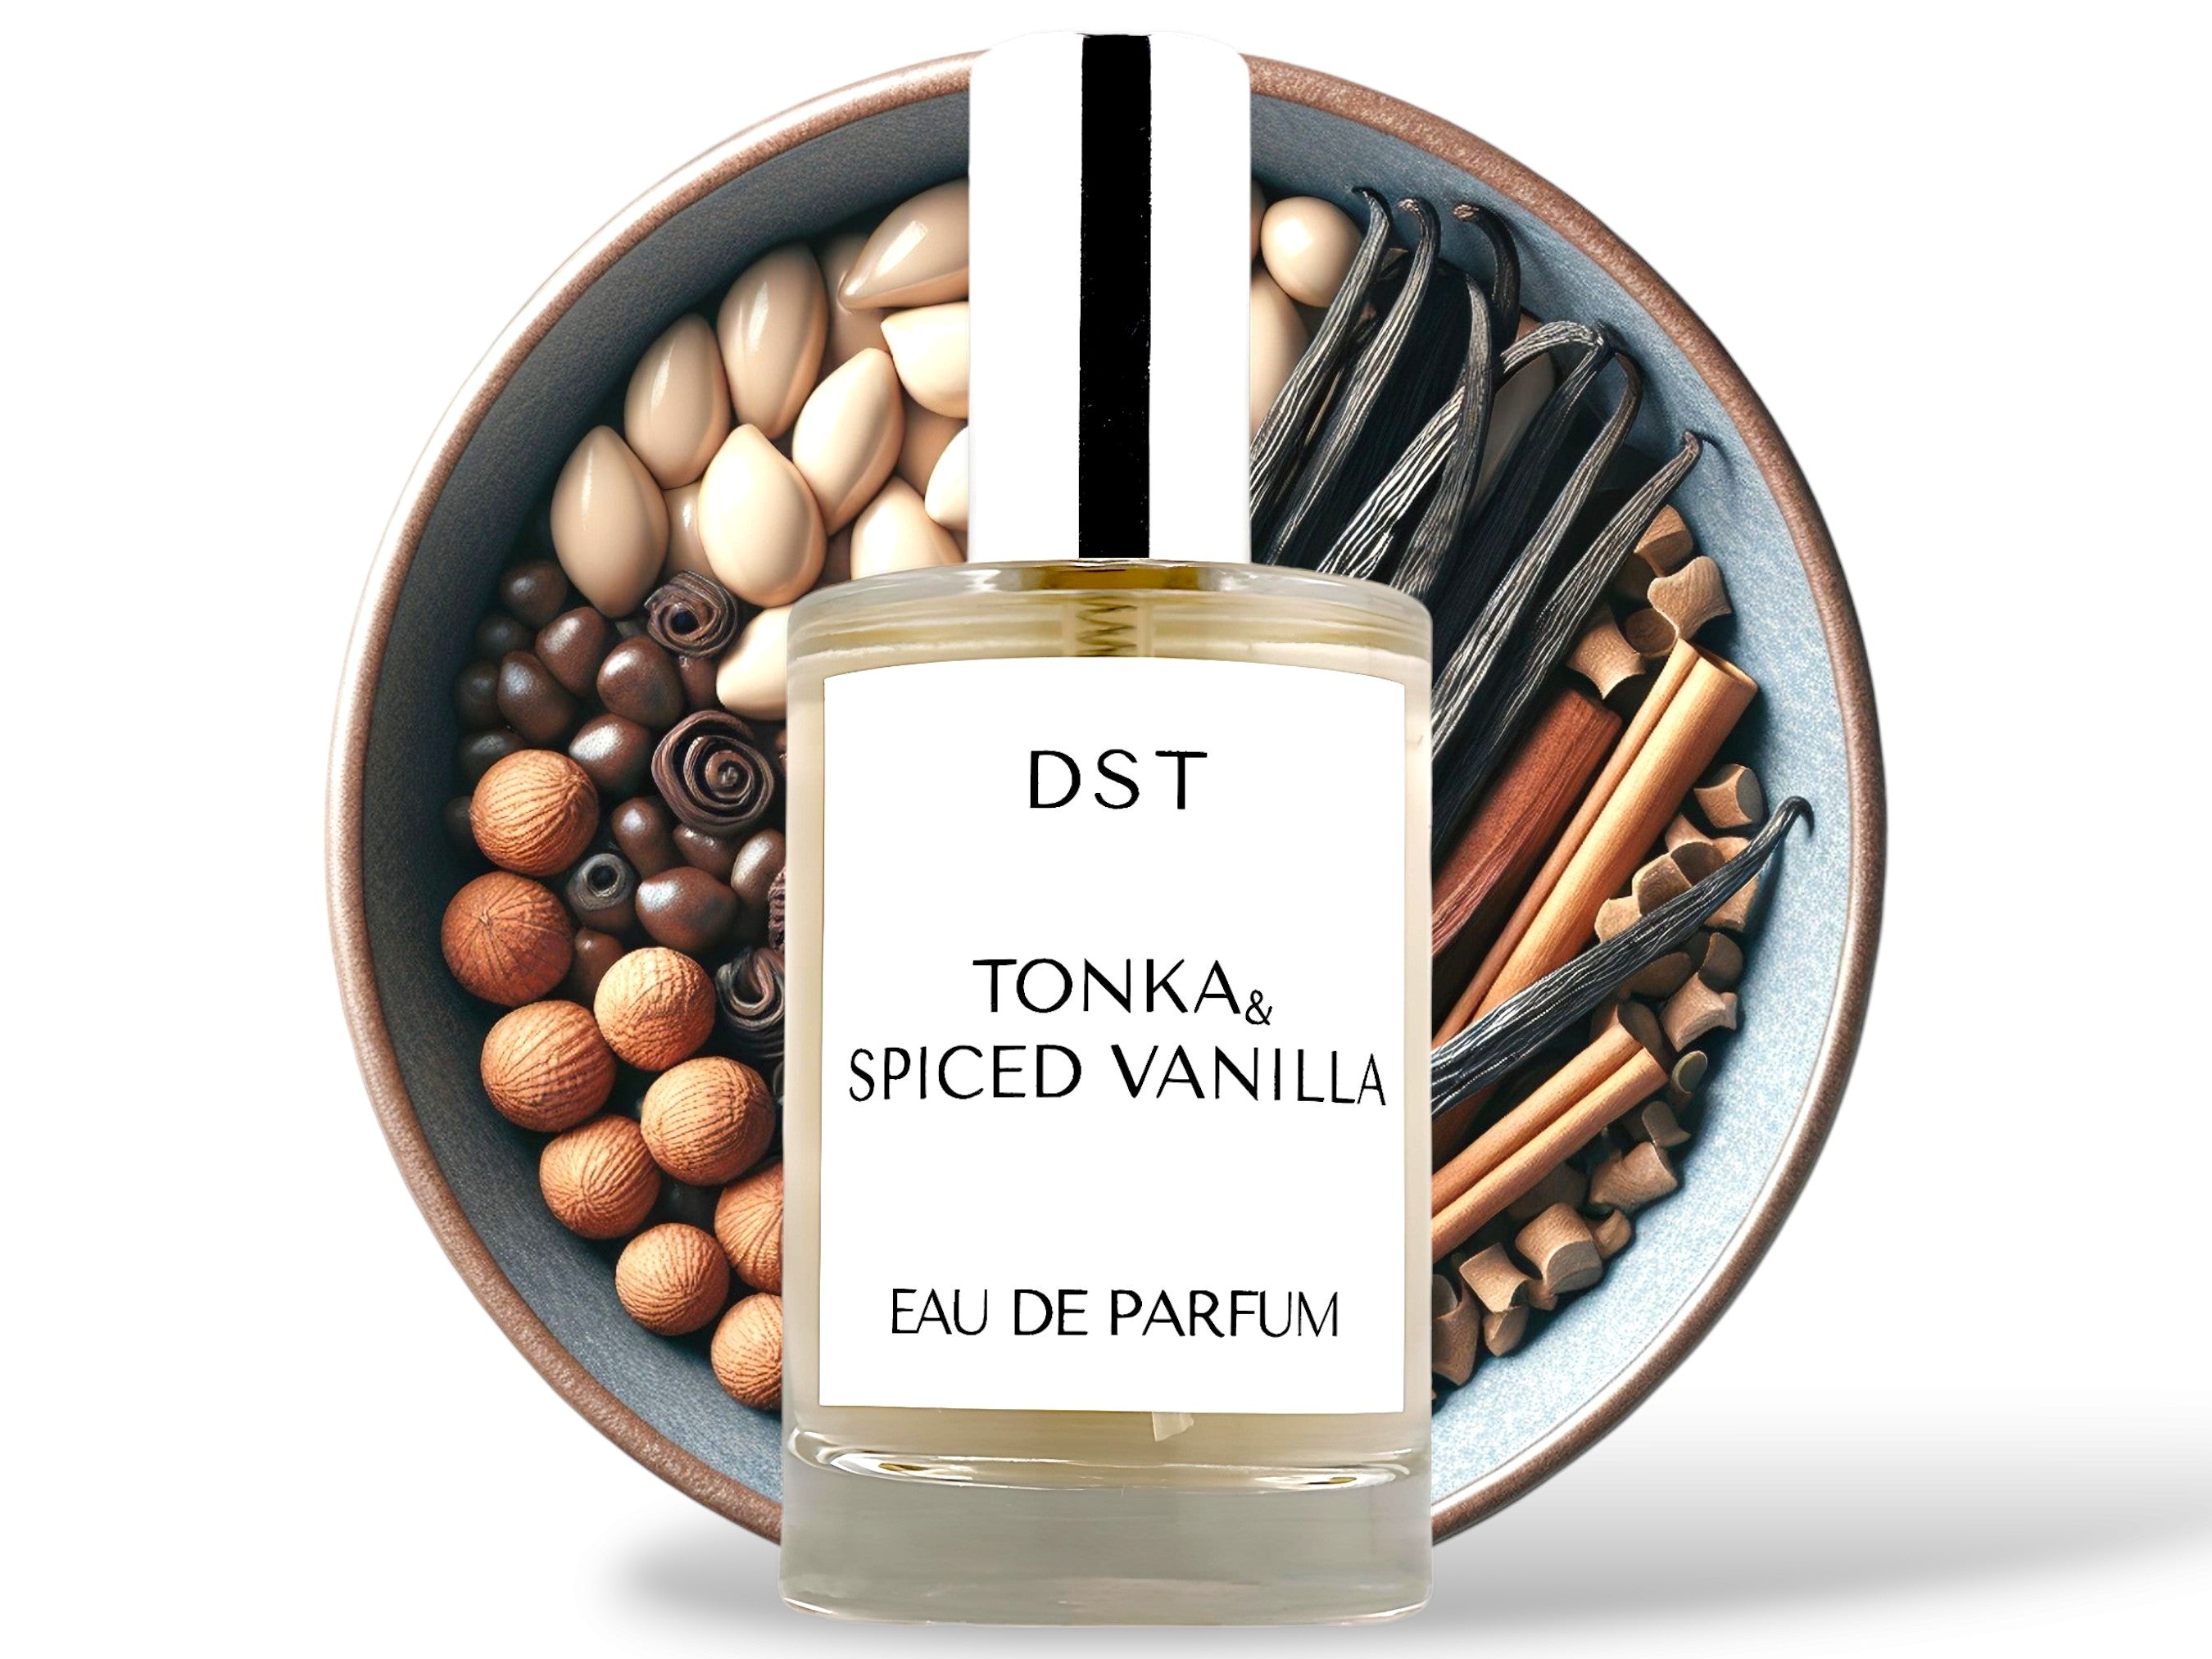 Tonka & Spiced Vanilla Eau de Parfum